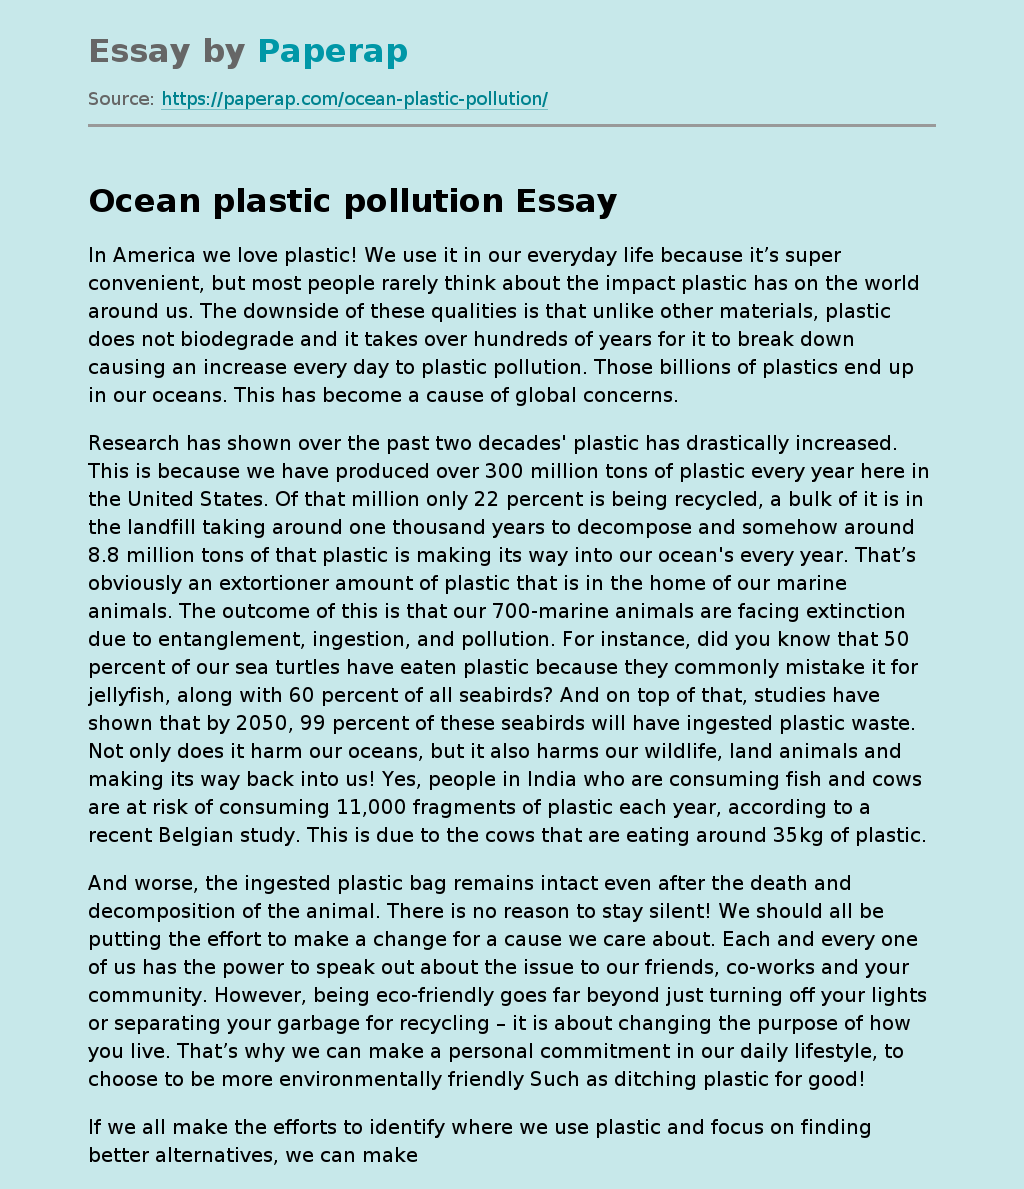 solution to ocean pollution essay